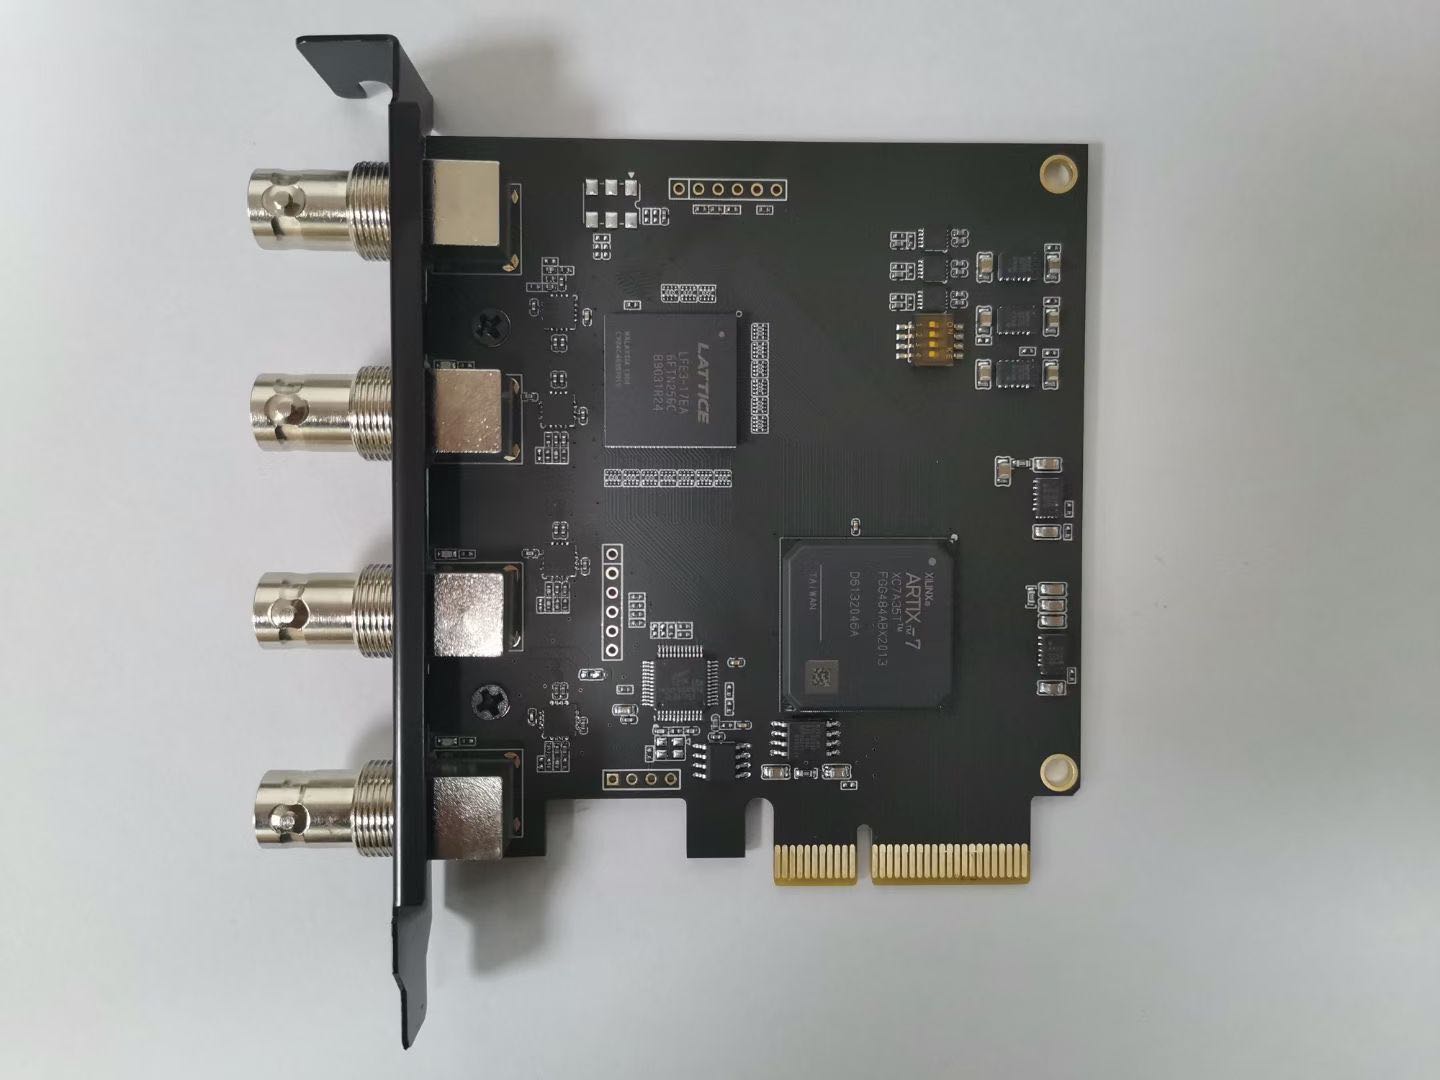 Card Livestream, capture 4 input SDI - PCIE cho PC giá rẻ